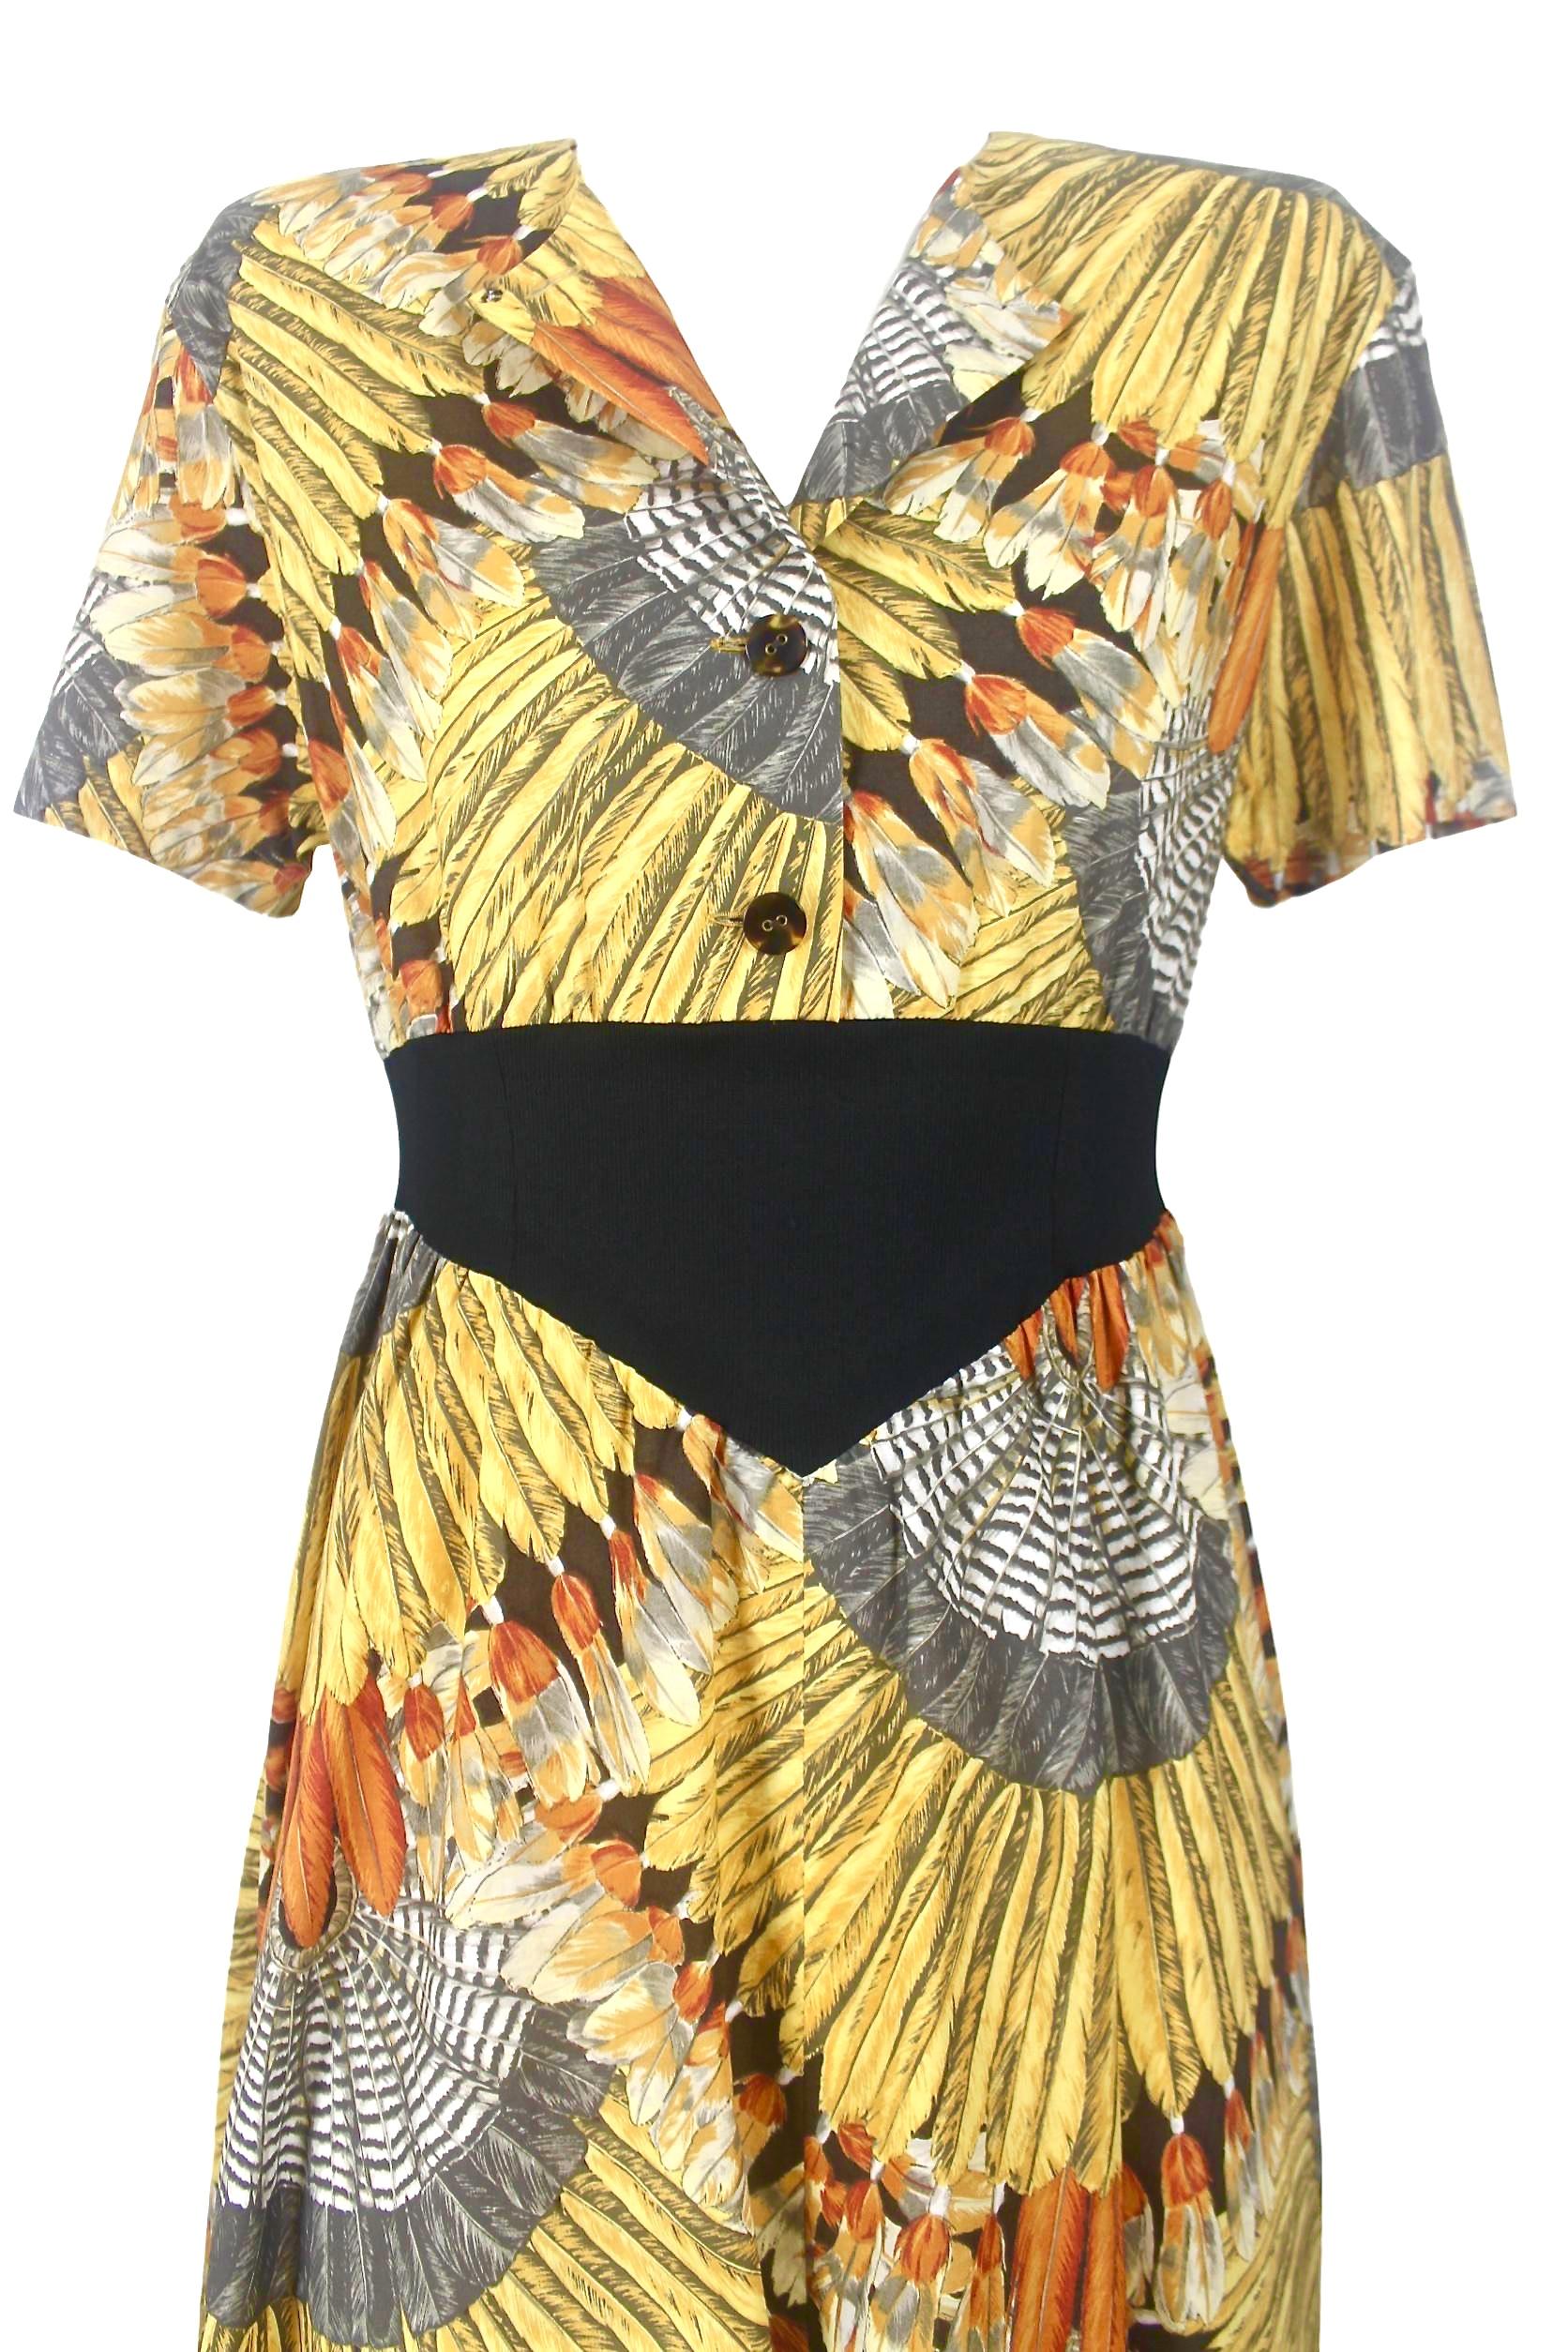 Brown Sorelle Fontana Feather Print Dress For Sale